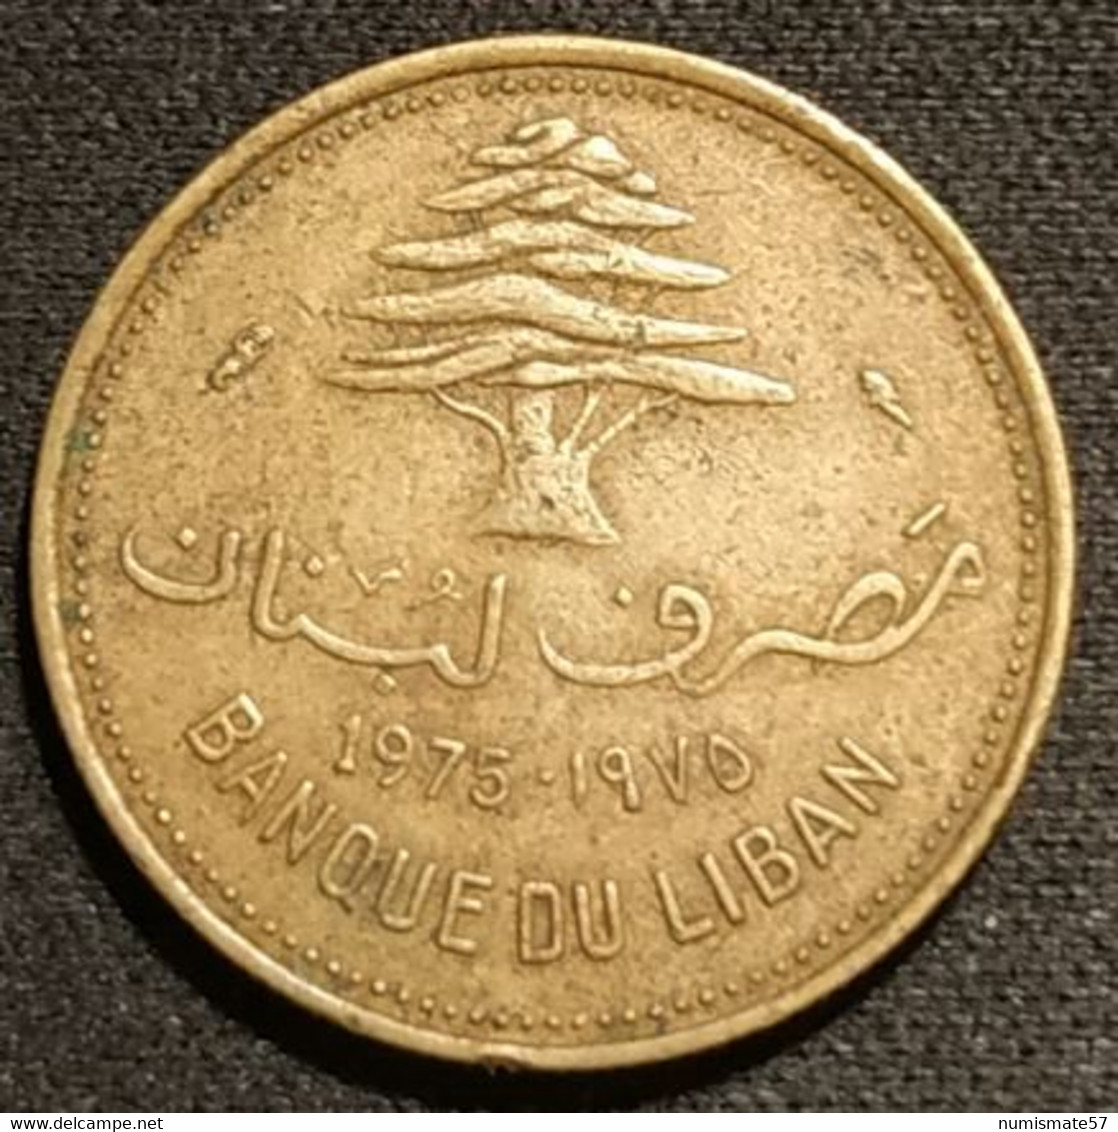 LIBAN - LEBANON - 10 PIASTRES 1975 - KM 26 - Libano